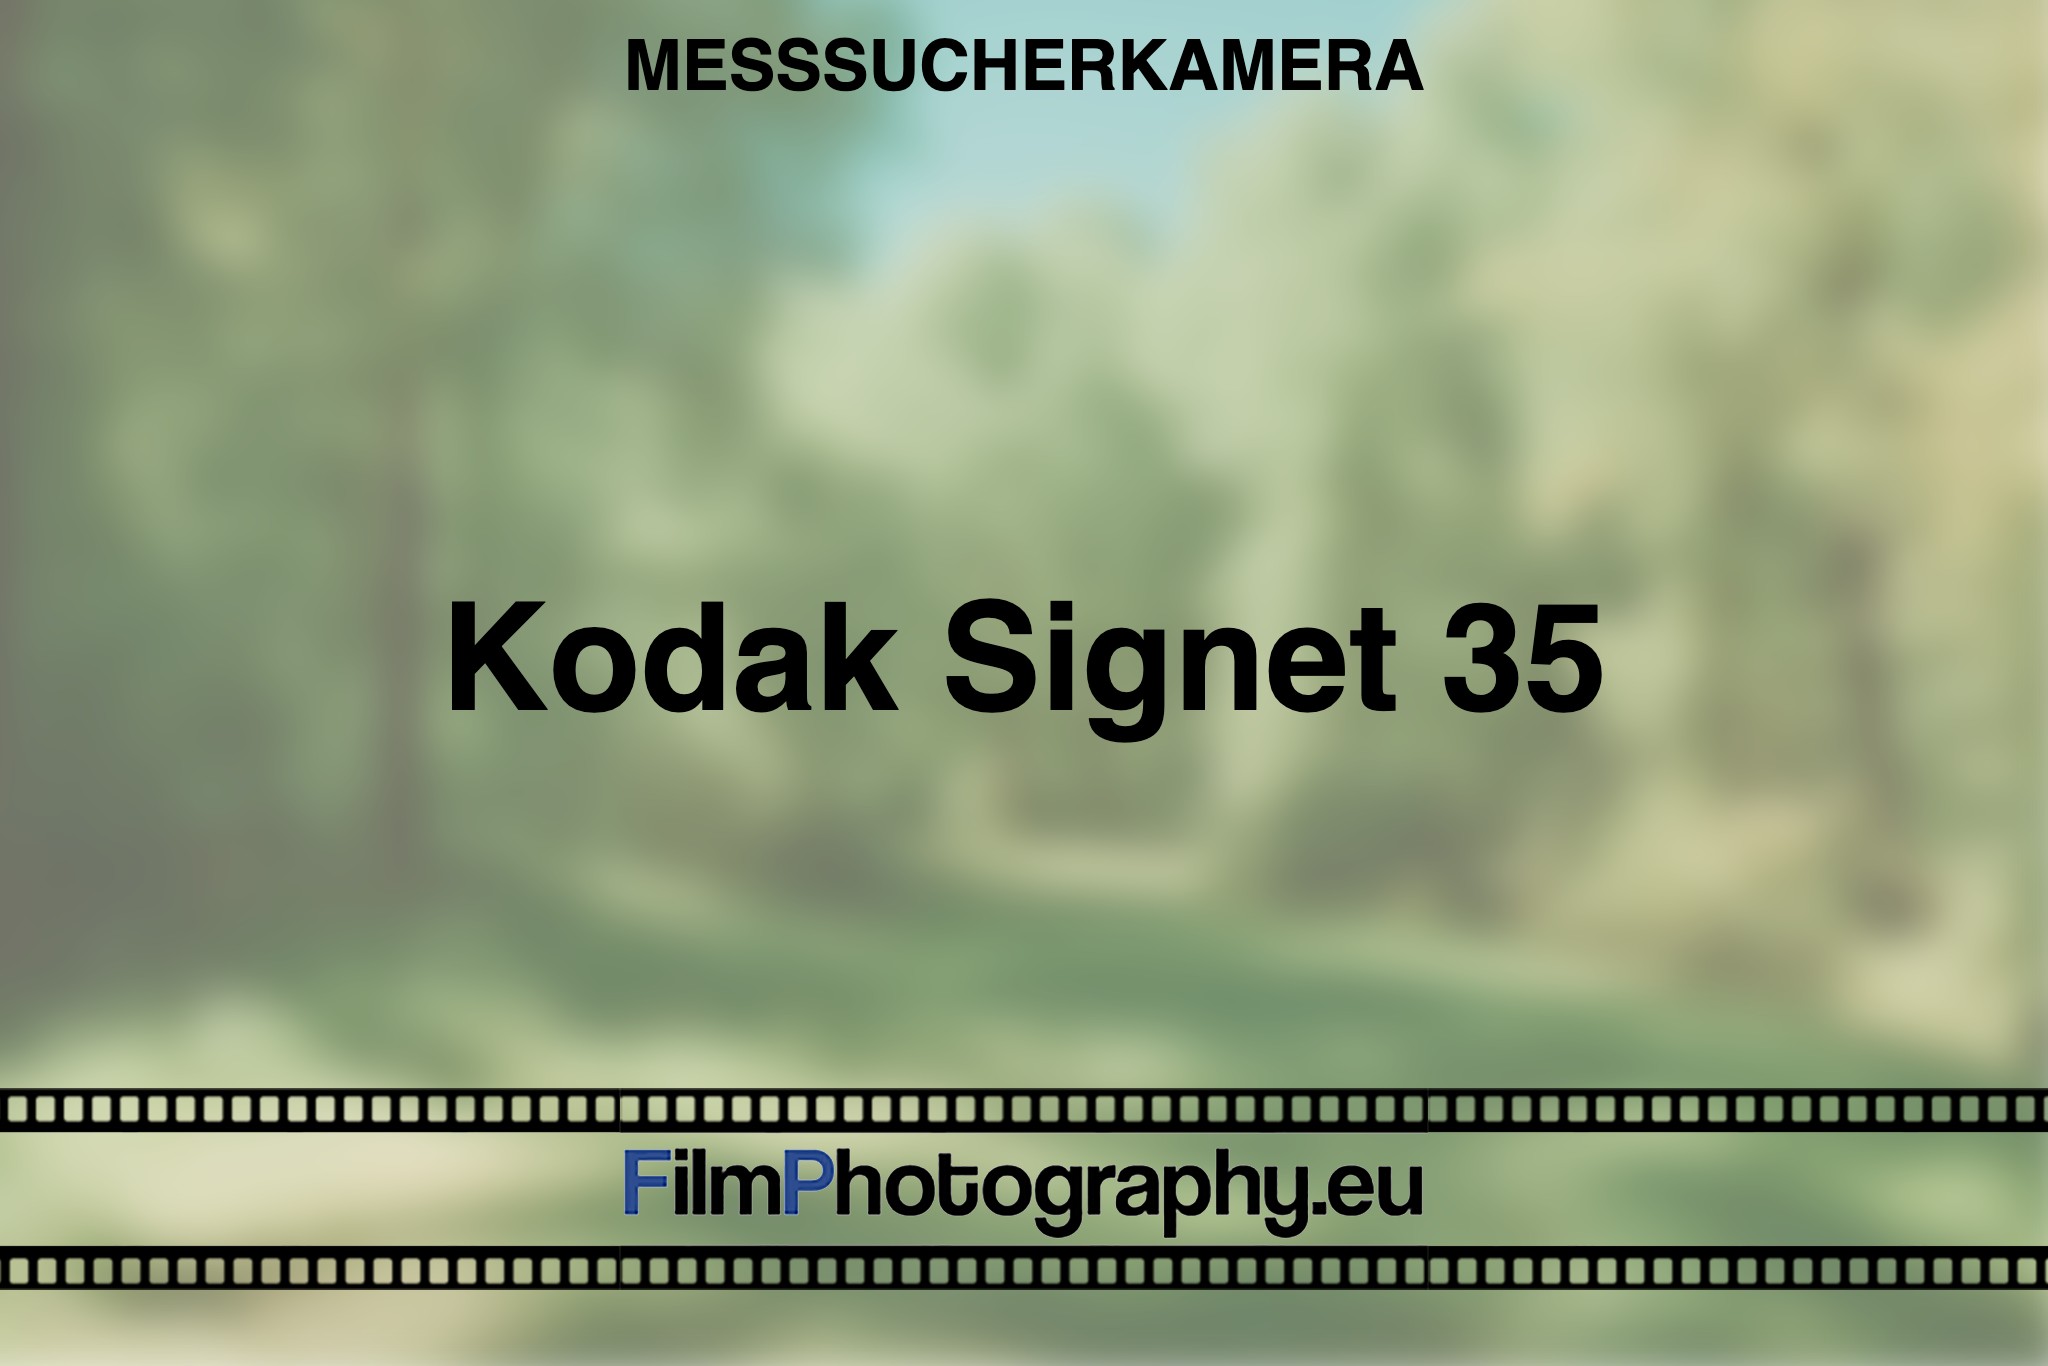 kodak-signet-35-messsucherkamera-bnv